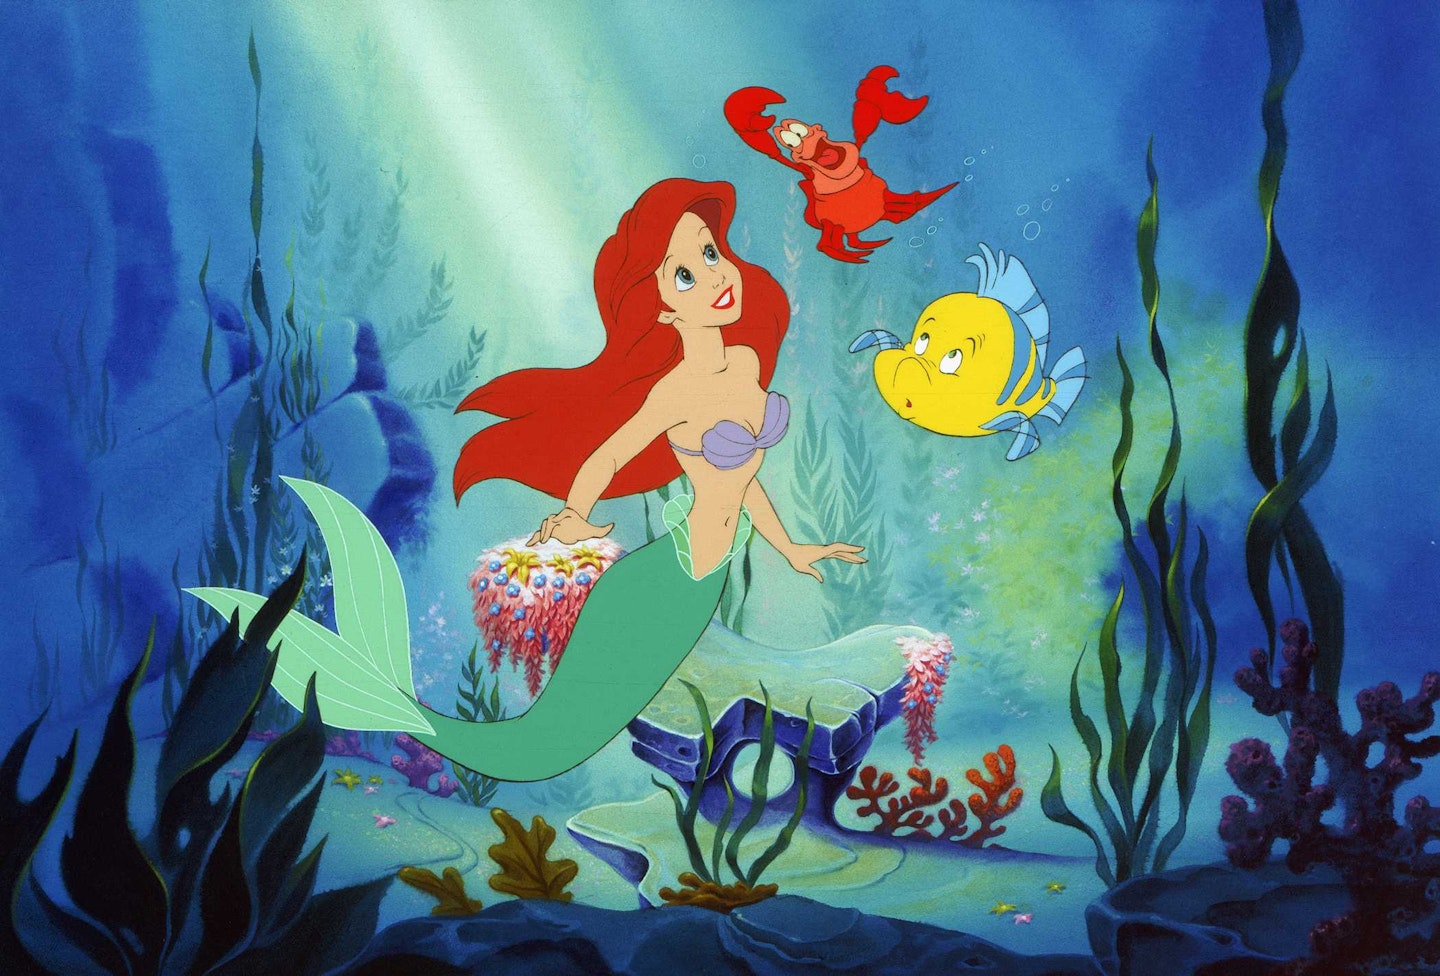 Disney's animated The Little Mermaid